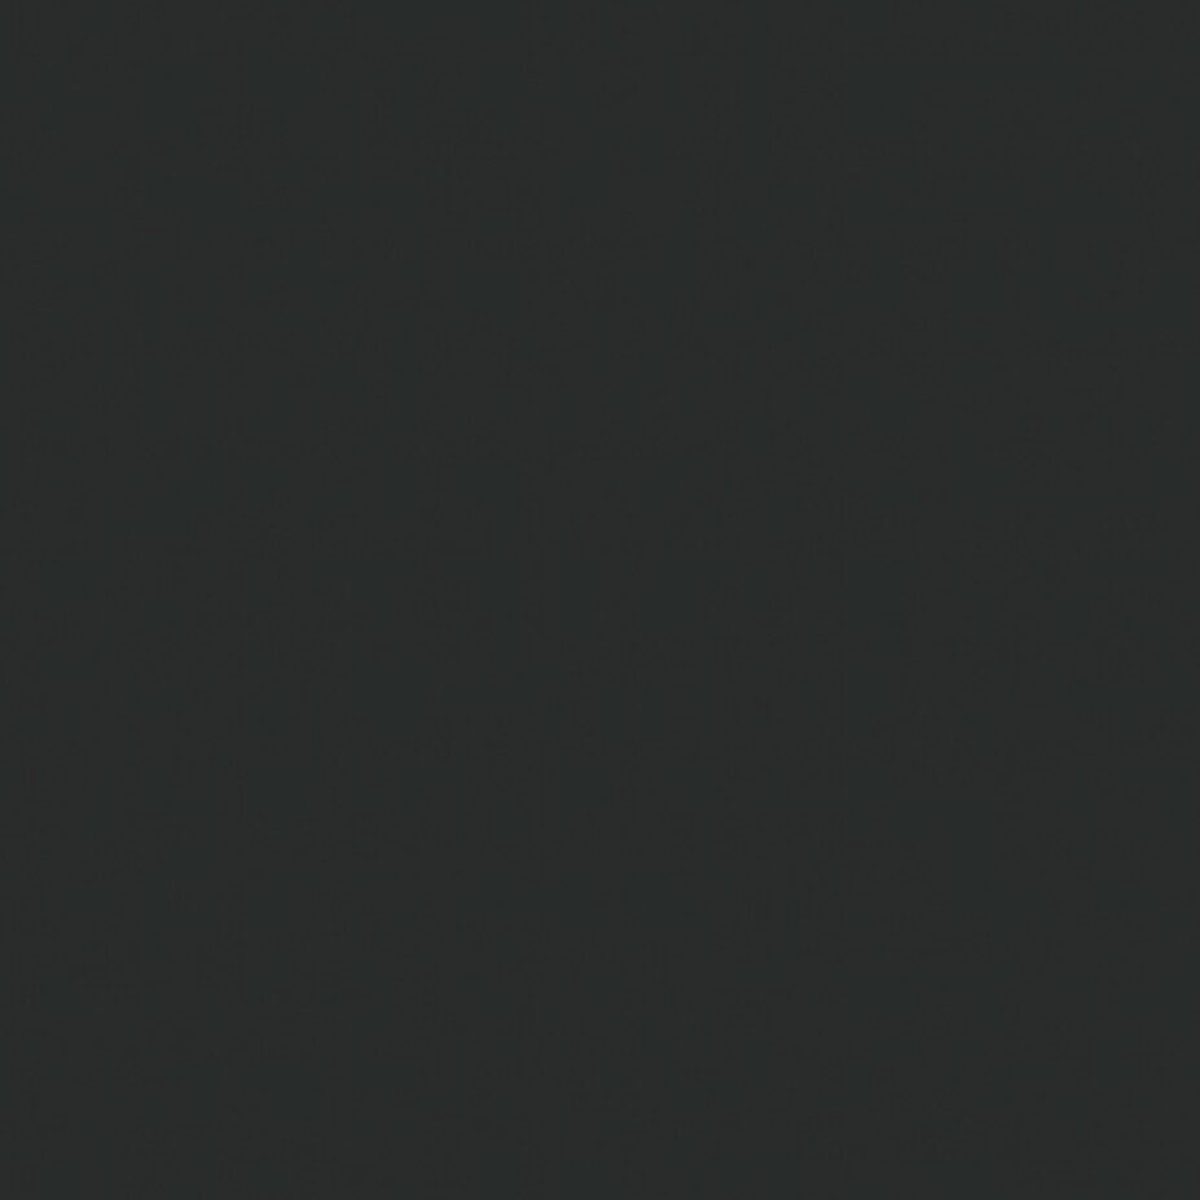 CARBON - Tamaños (1,22 x 2,44m)  |  Espesor (0.7mm)